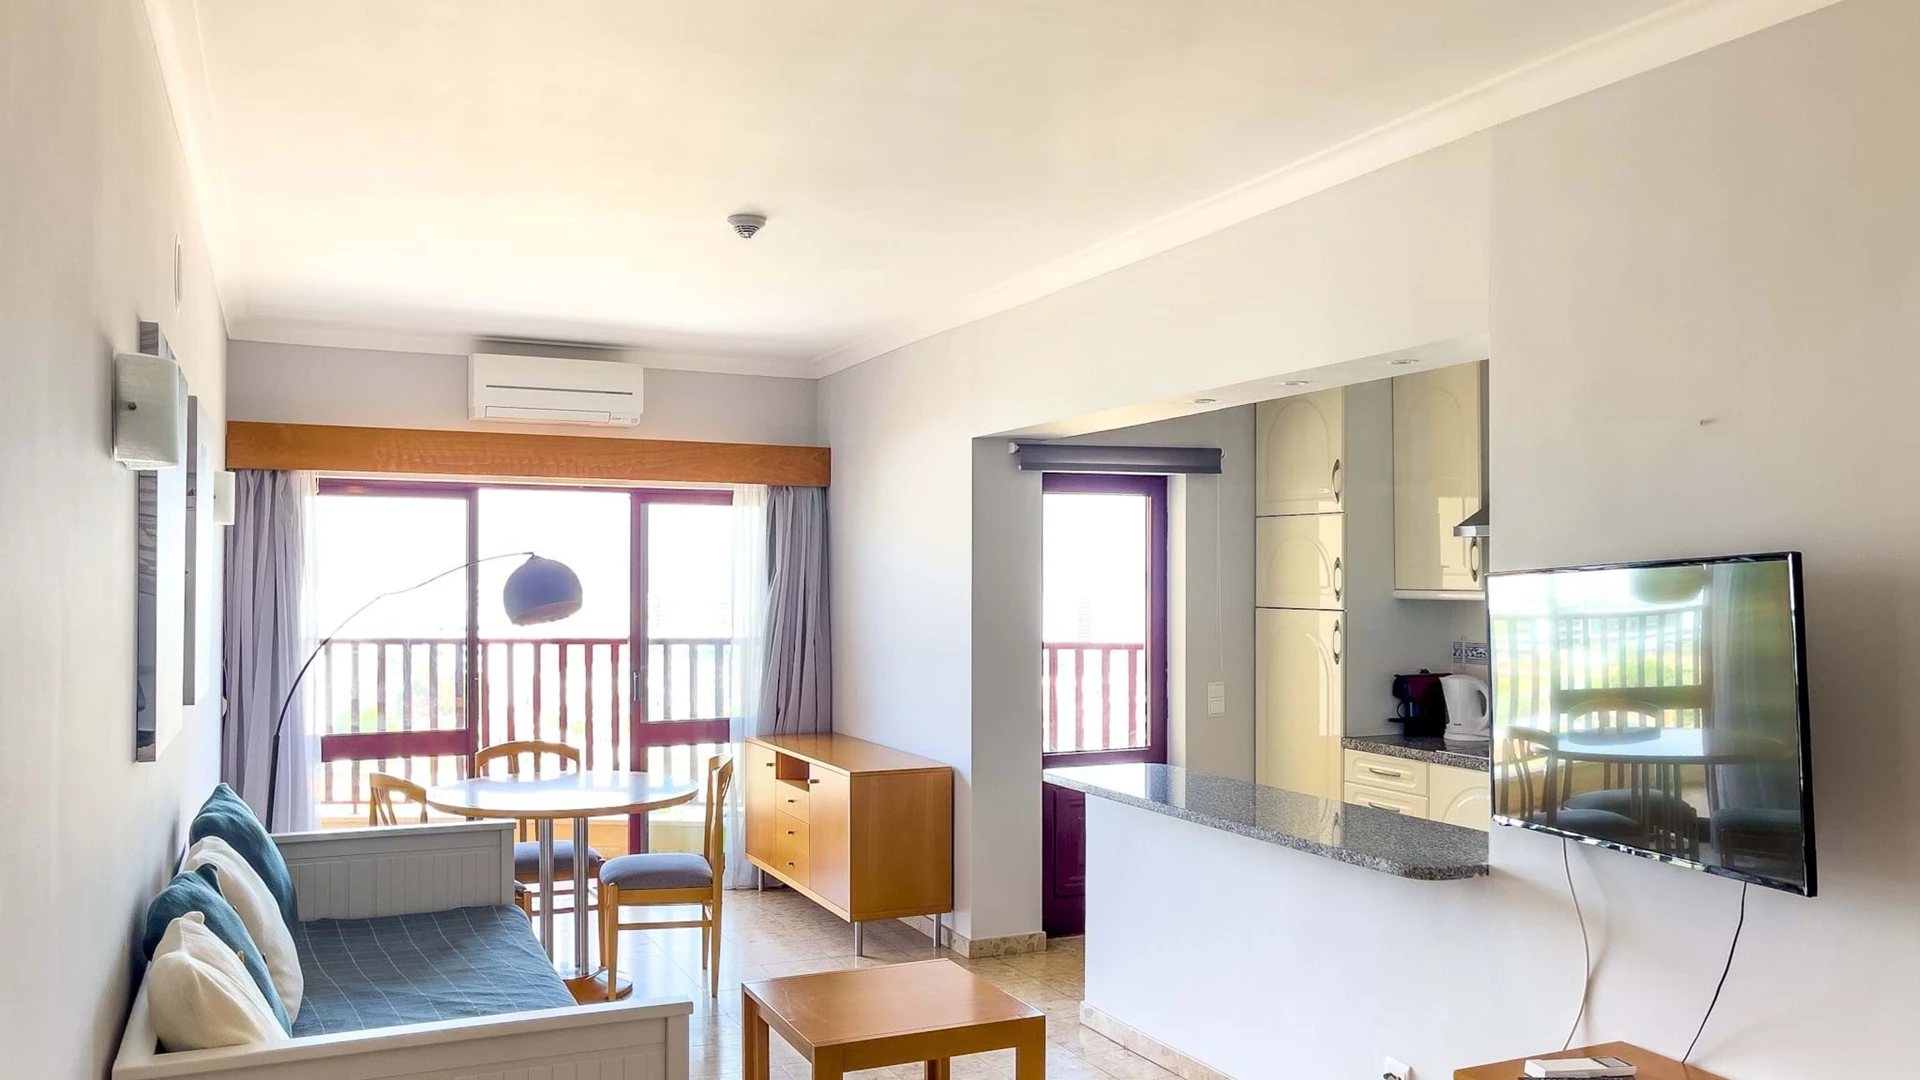 1 bedroom apartment with swimming pool in Praia da Rocha